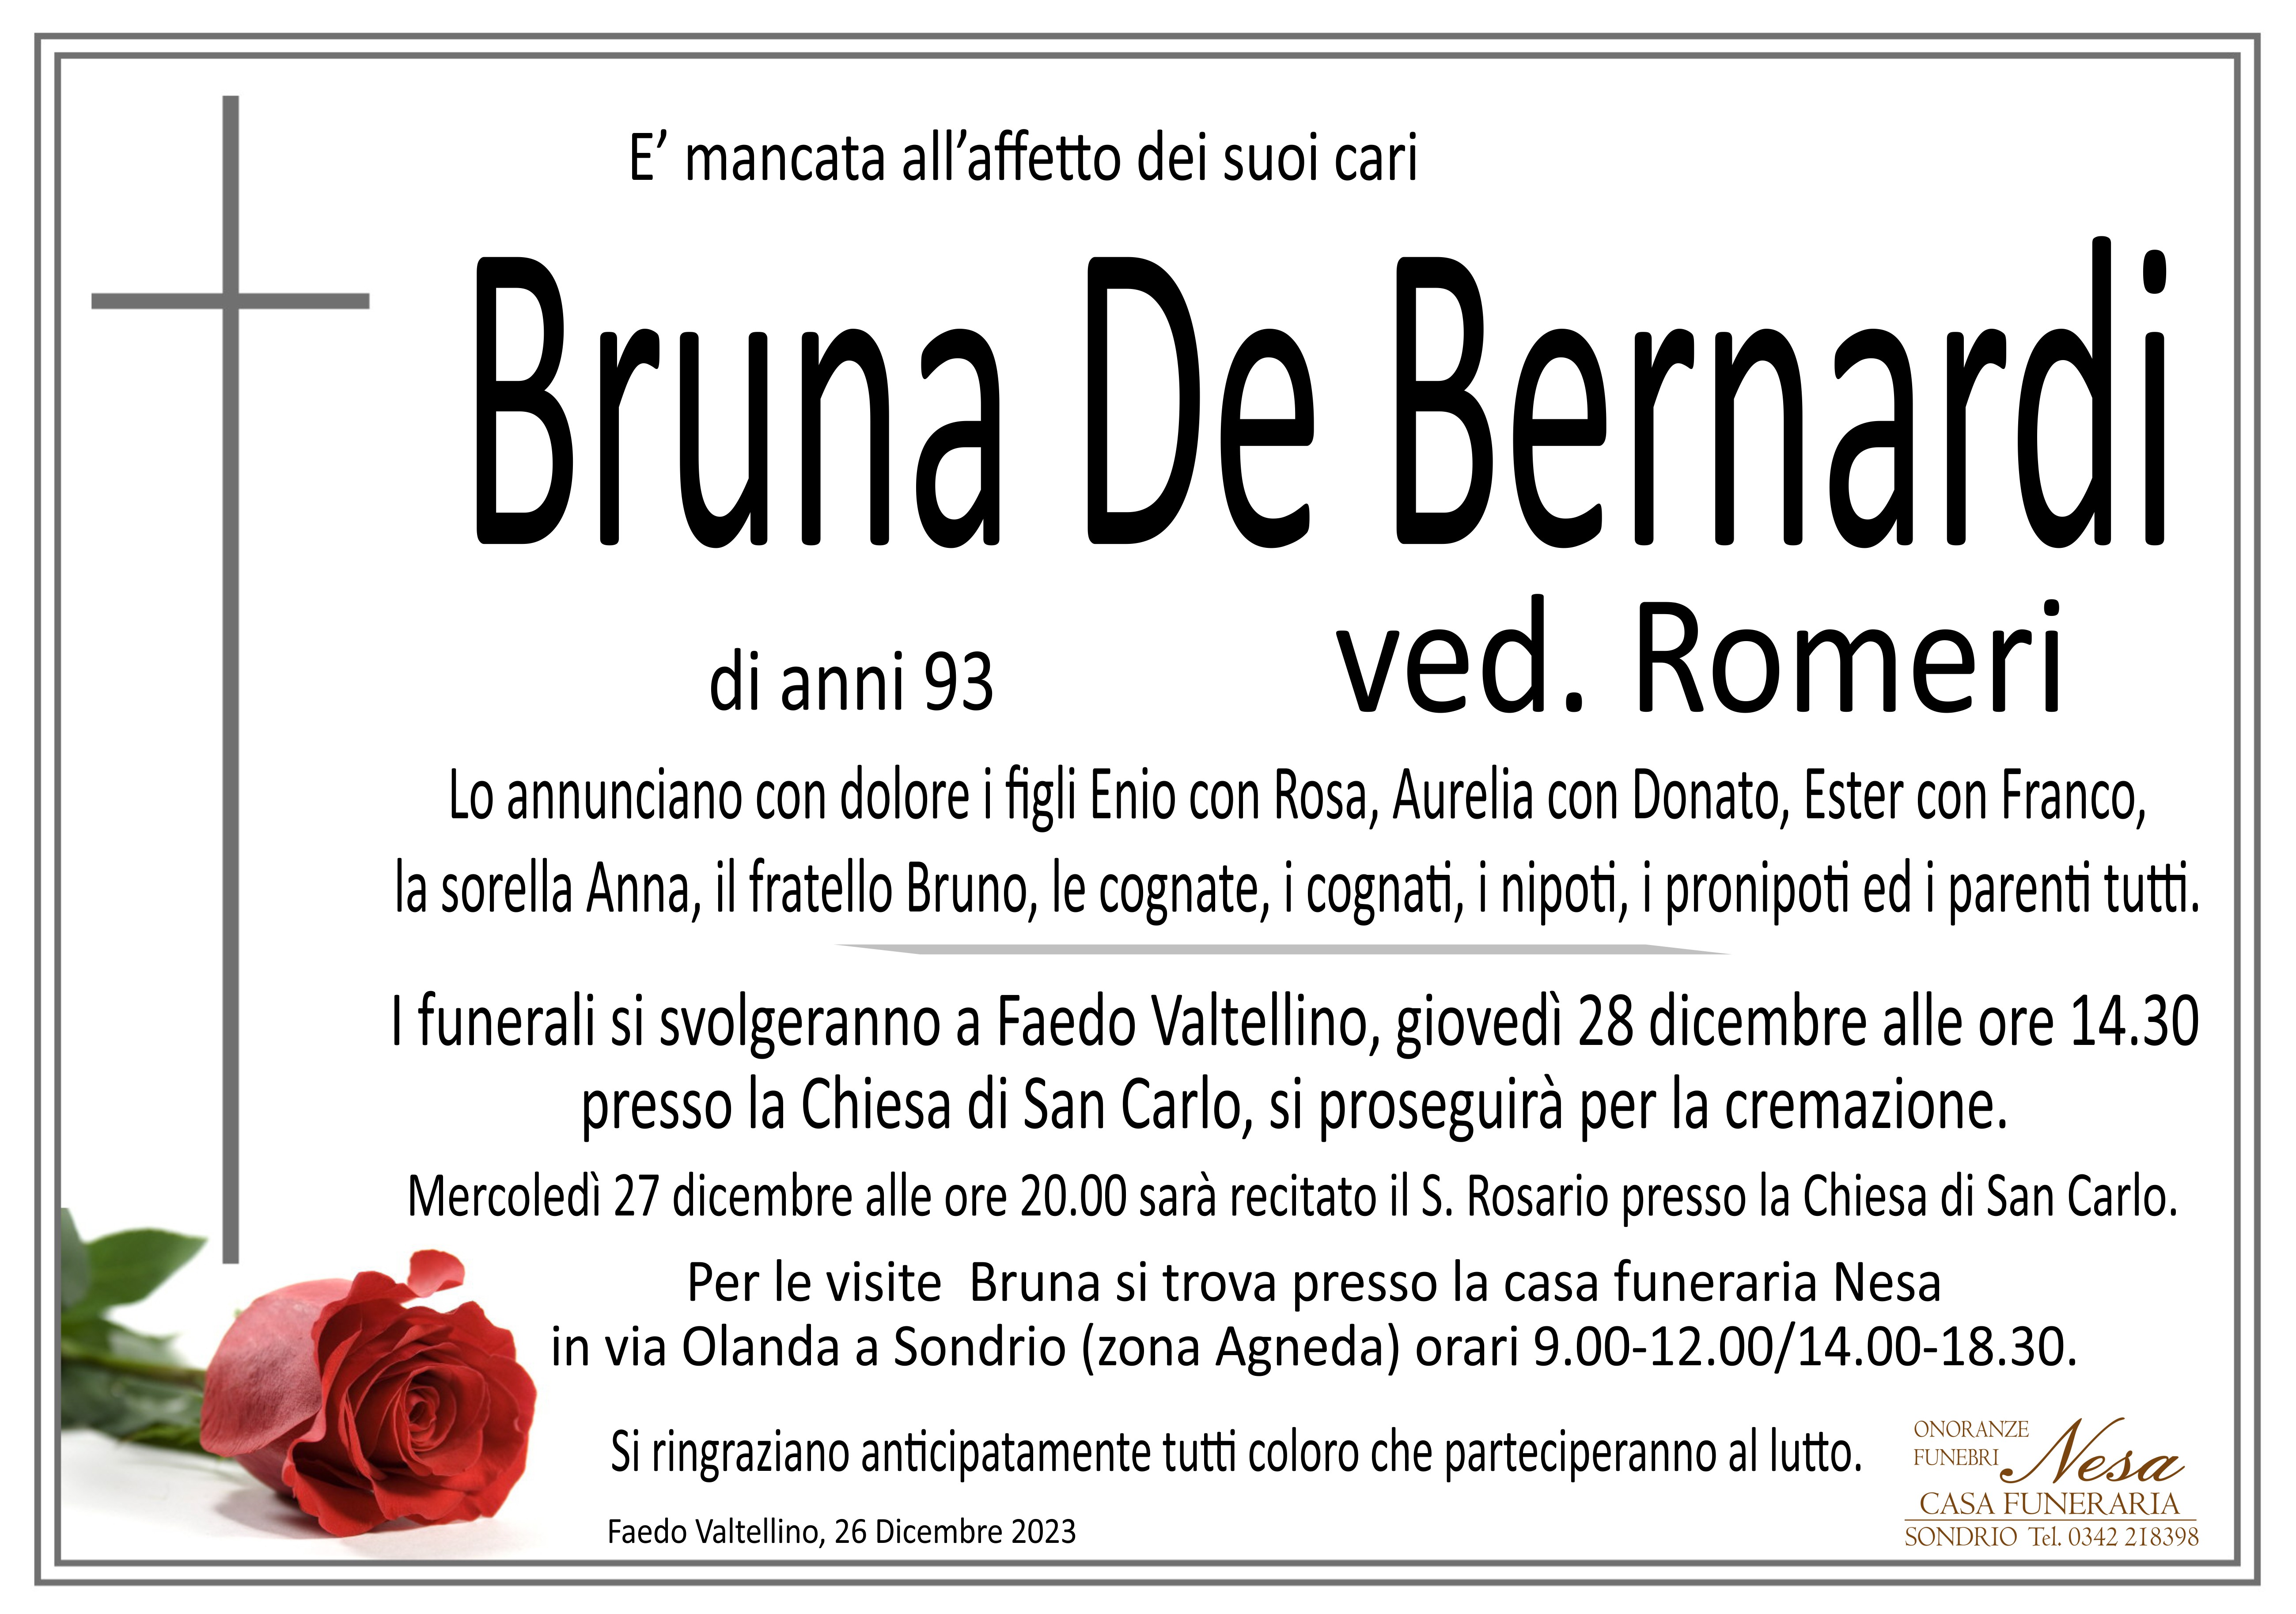 Necrologio Bruna De Bernardi ved. Romeri